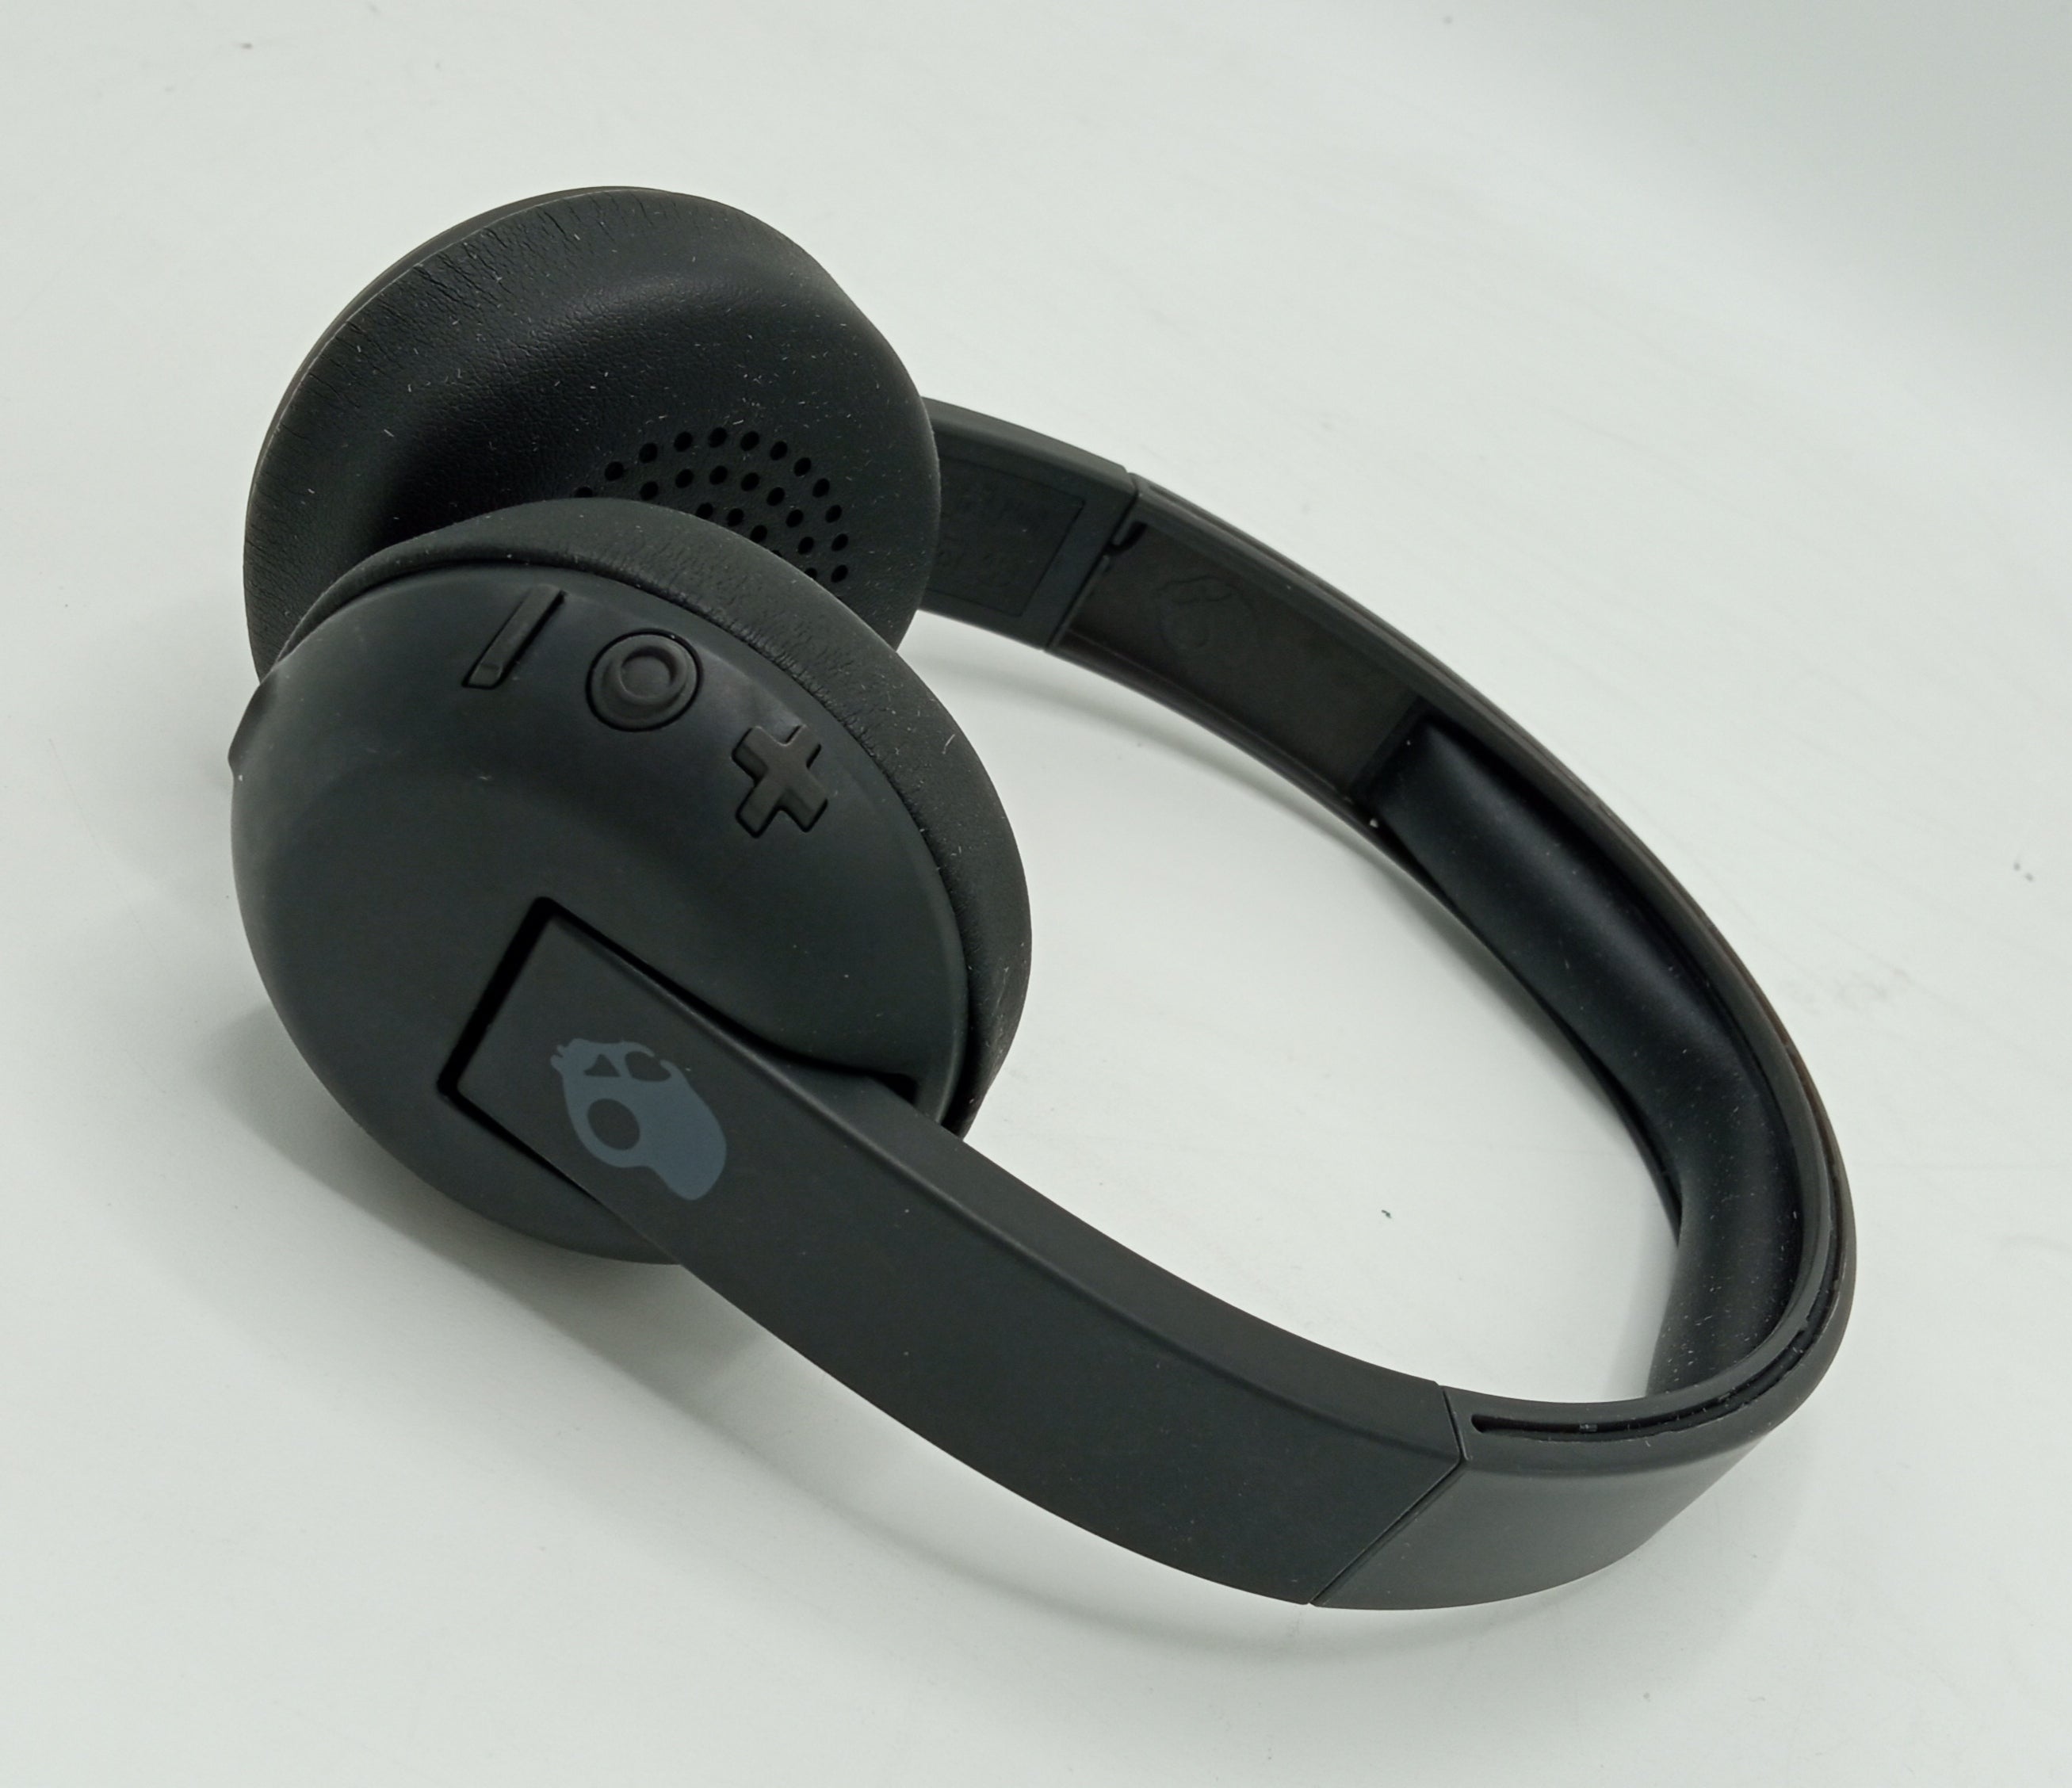 Skullcandy Uproar Wireless Bluetooth Headphones